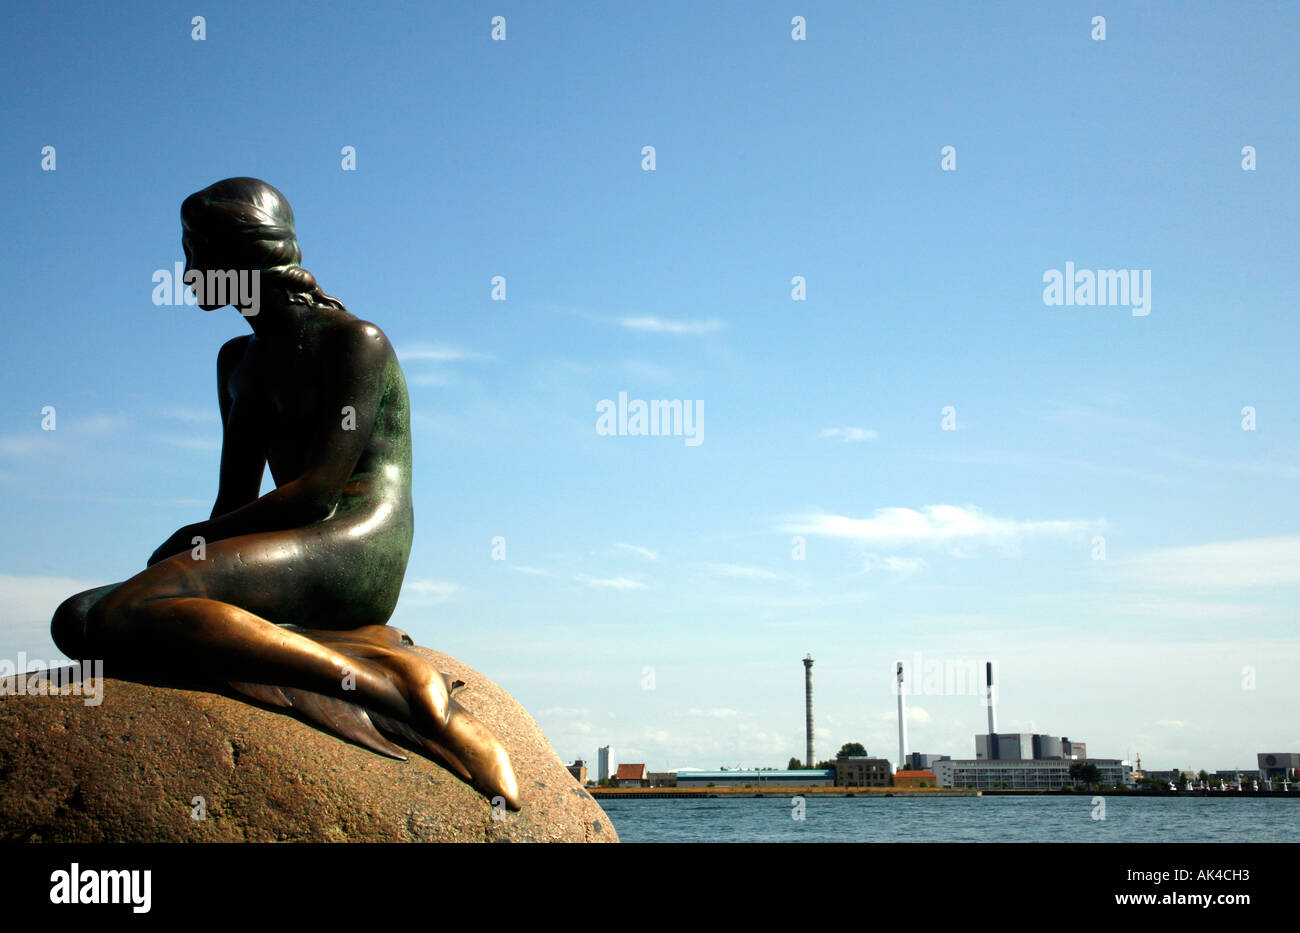 The Little Mermaid statue in Copenhagen, Denmark Stock Photo